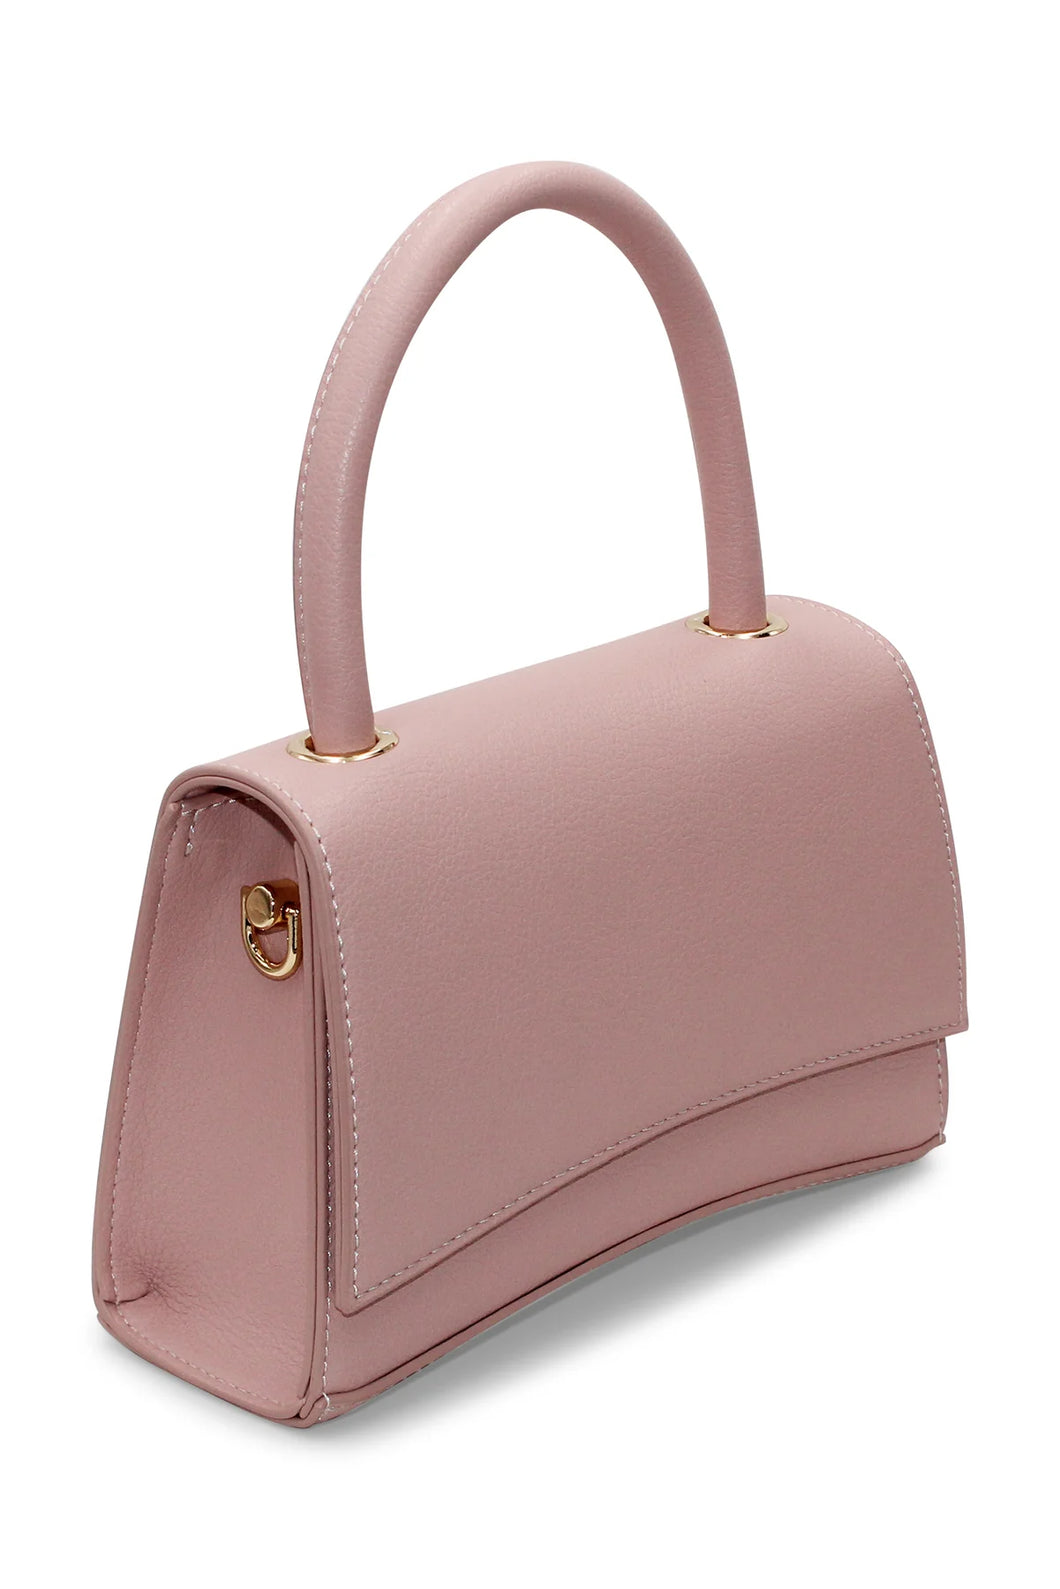 Zoella Top Handle Bag | Blush